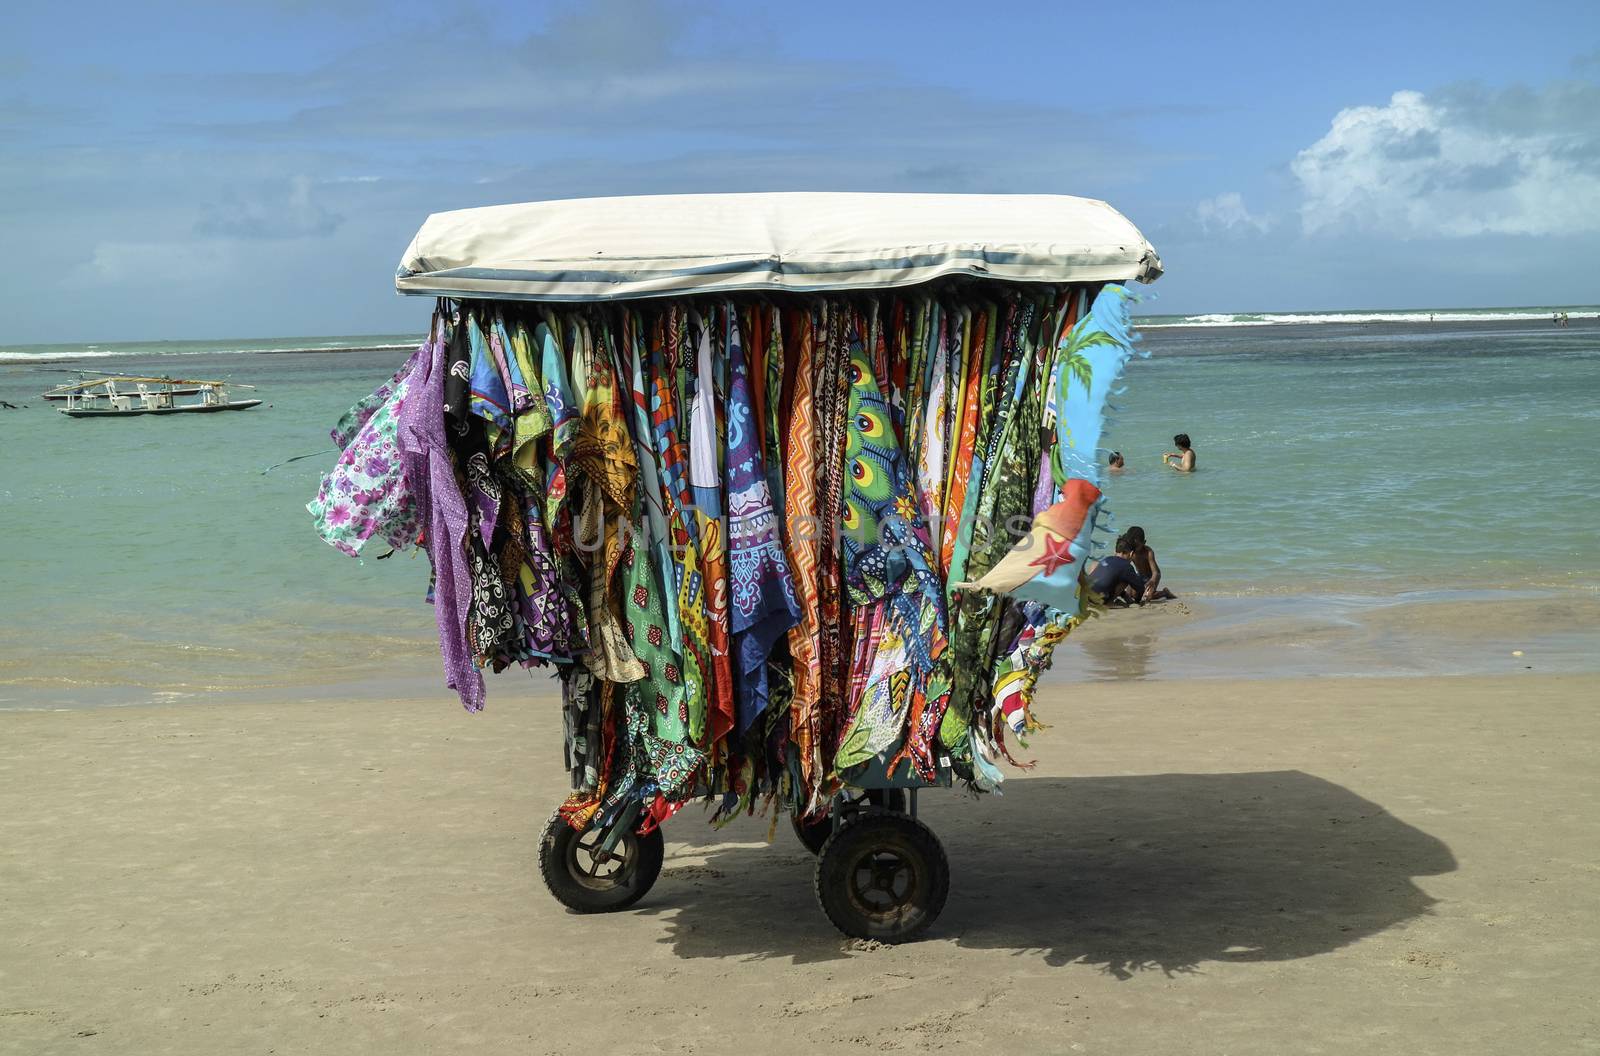 Beach vending cart in northeast Brazil by marphotography